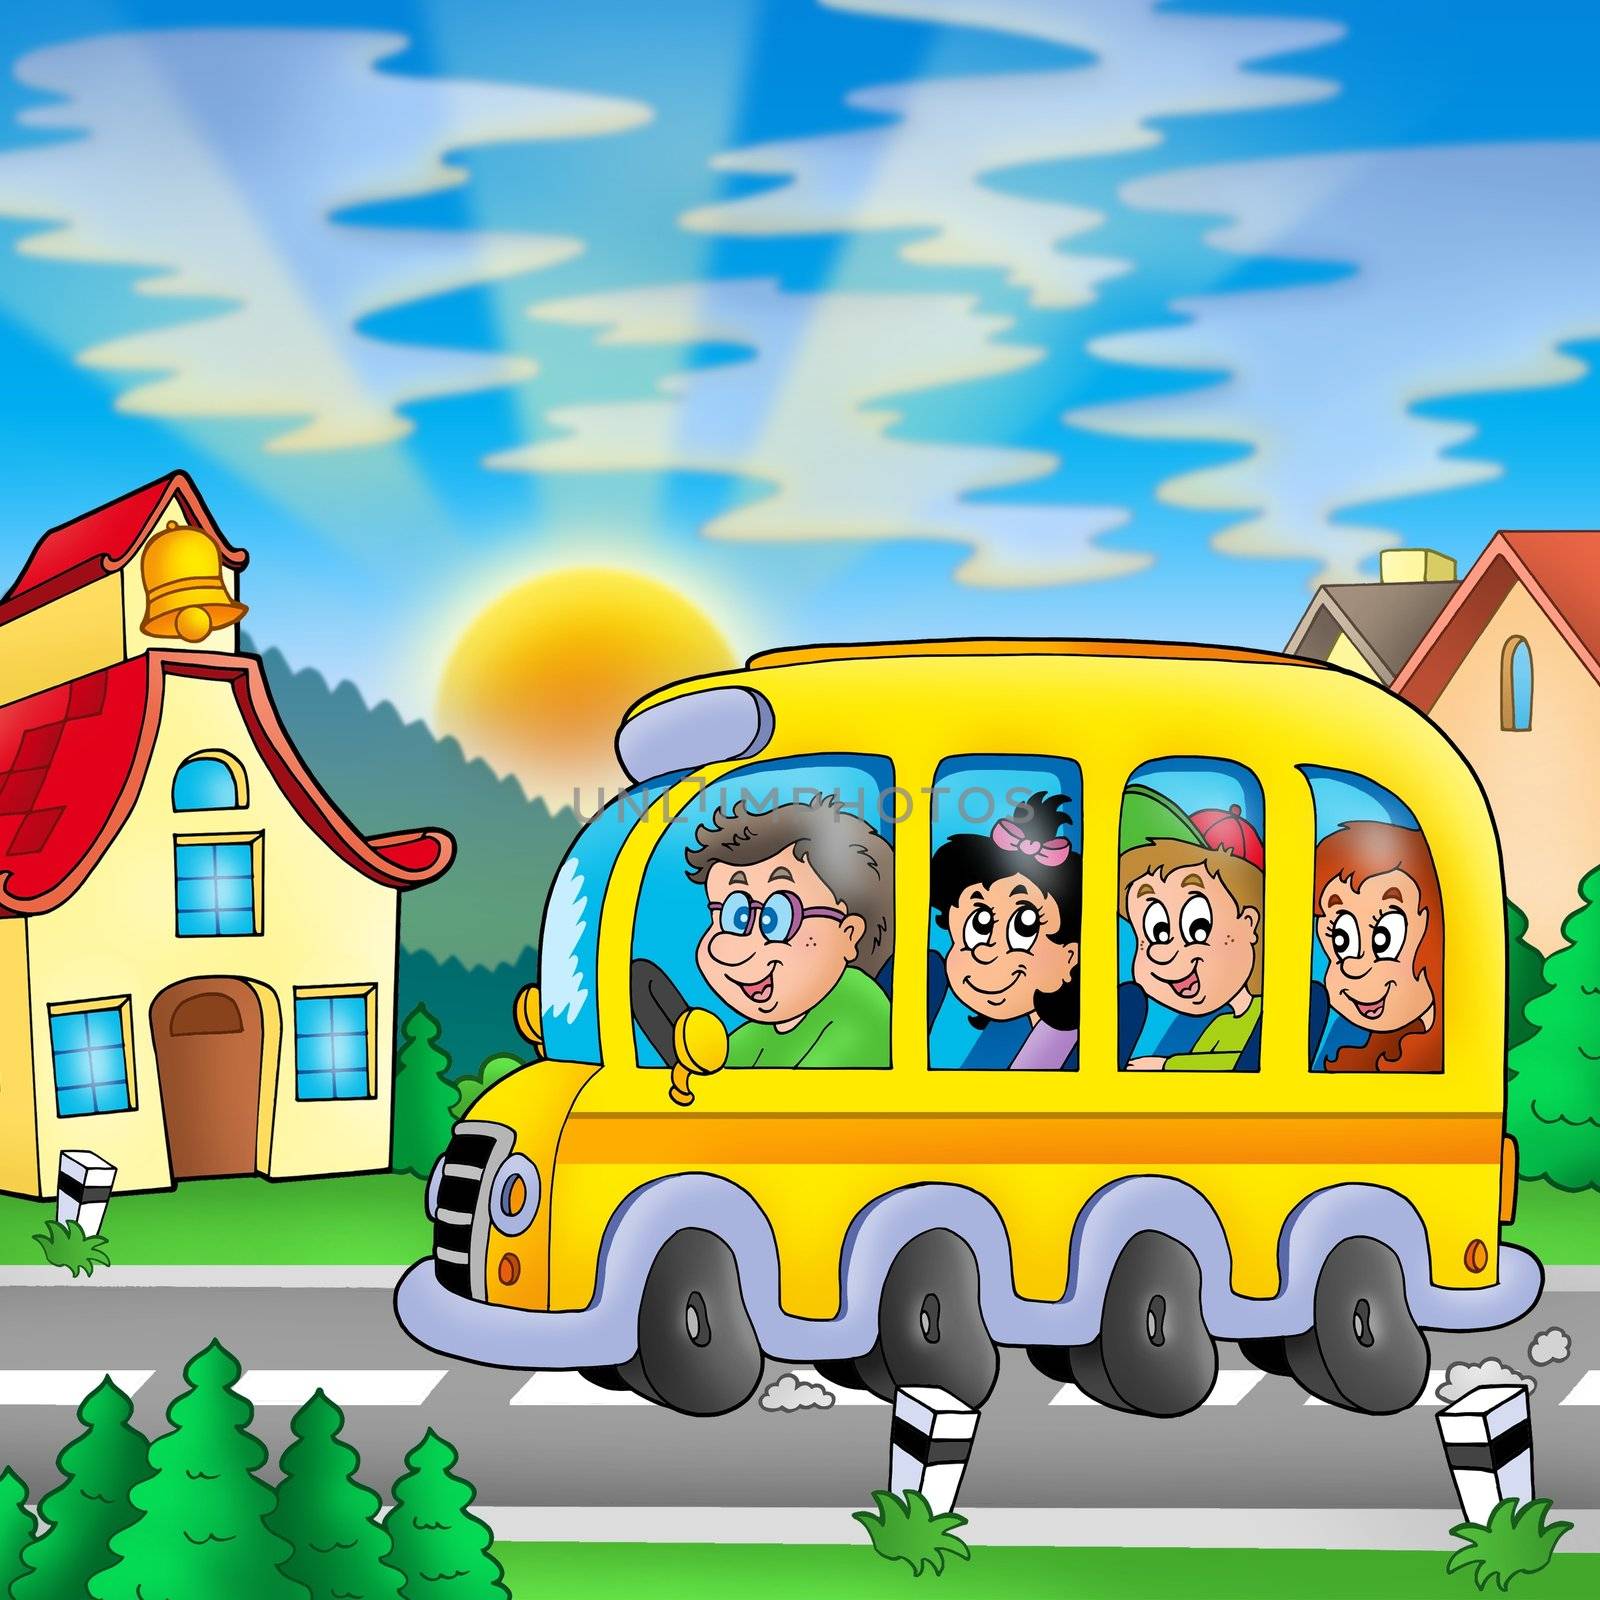 School bus on road - color illustration.